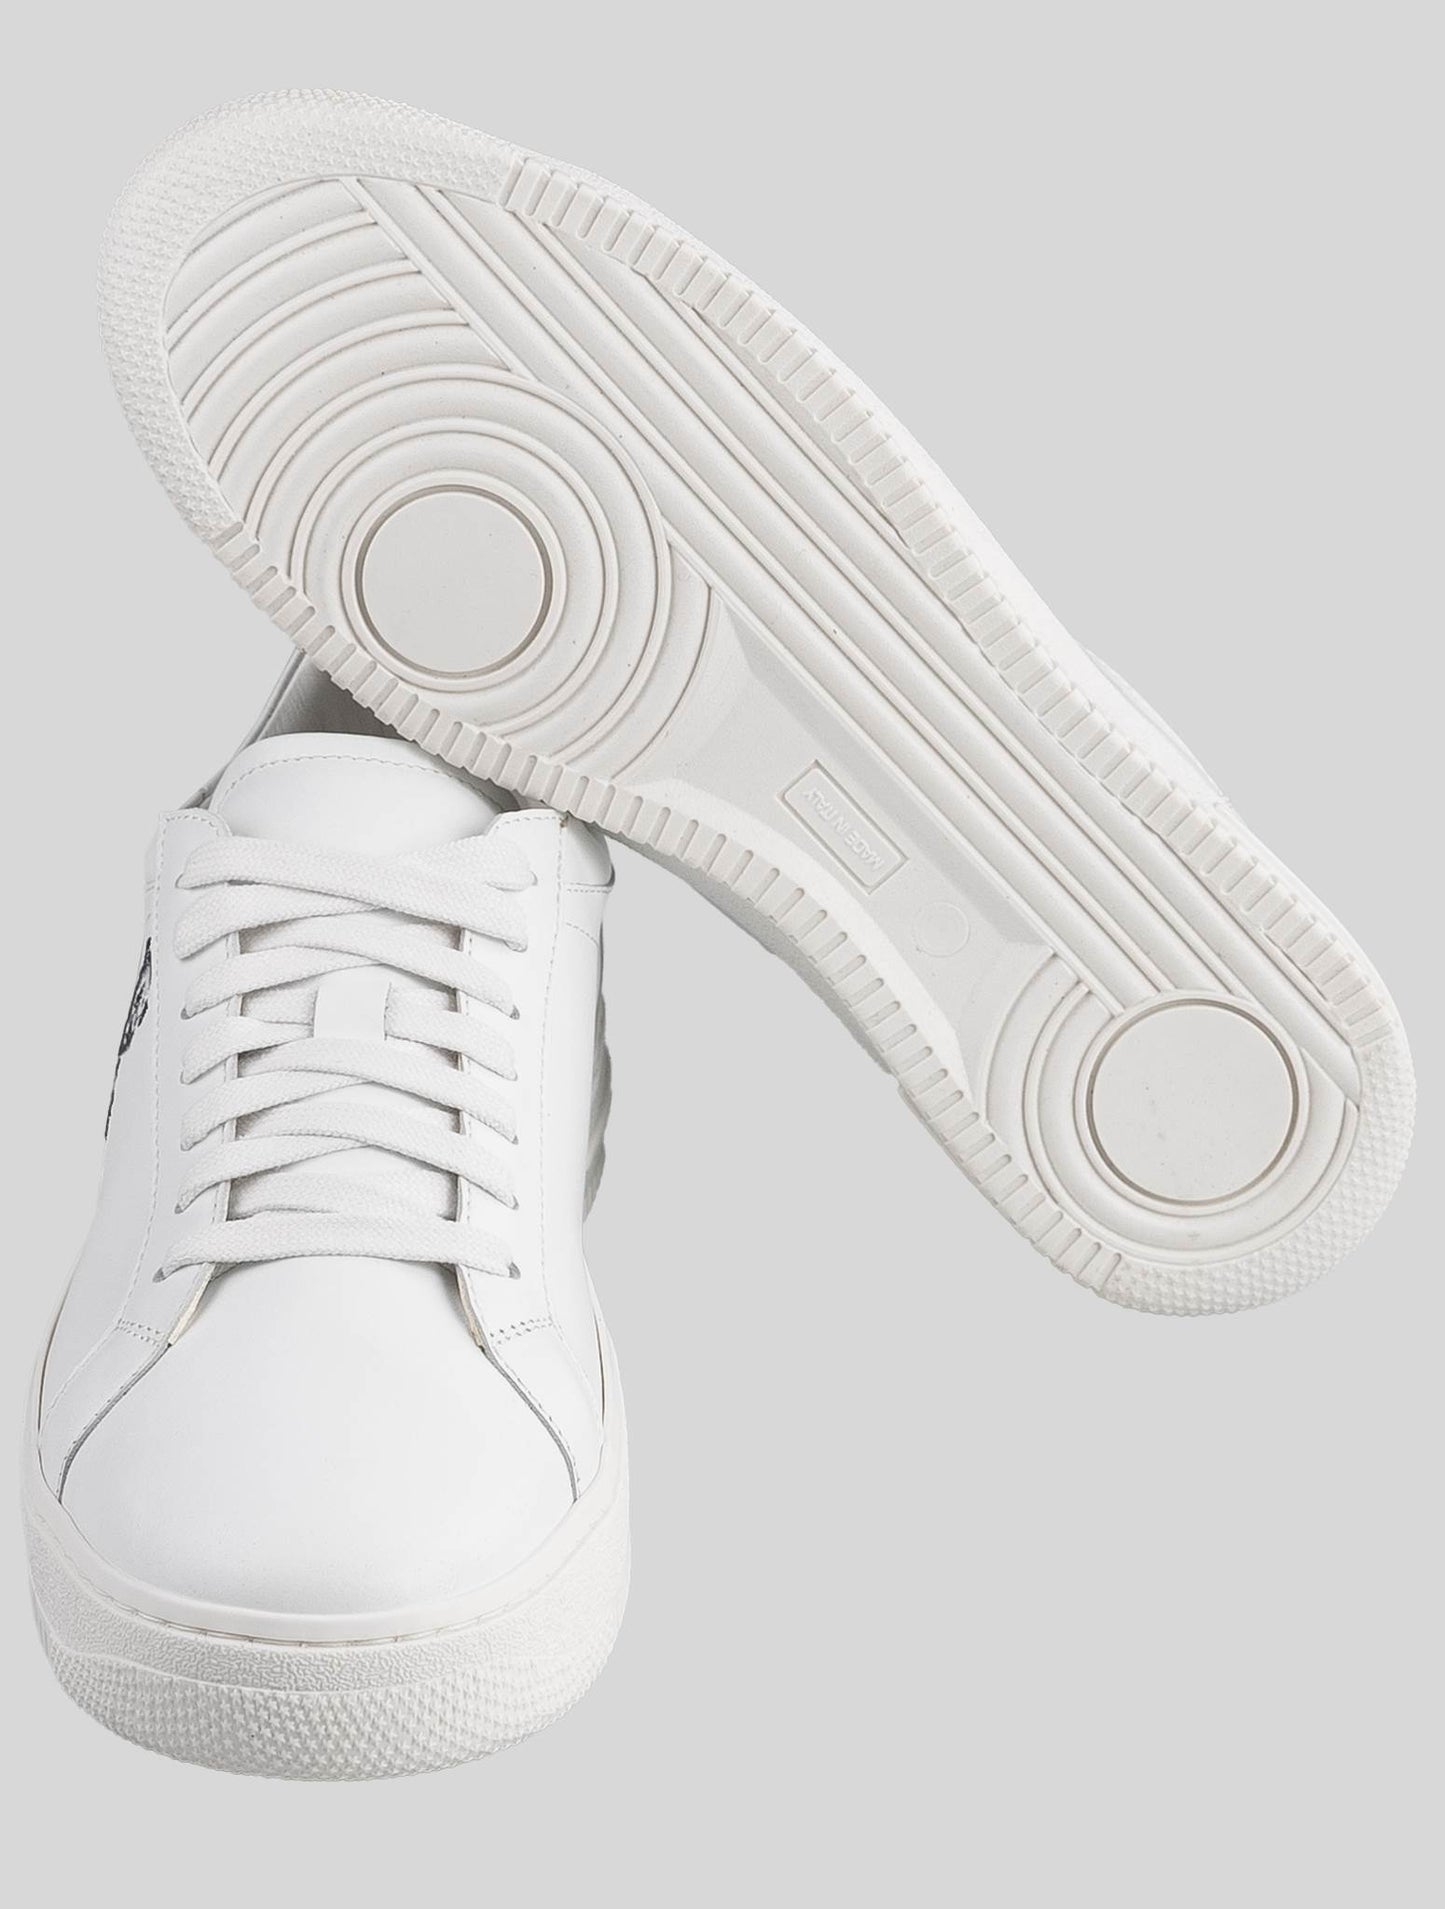 KNT Kiton أحذية رياضية من الجلد الأبيض طبعة خاصة